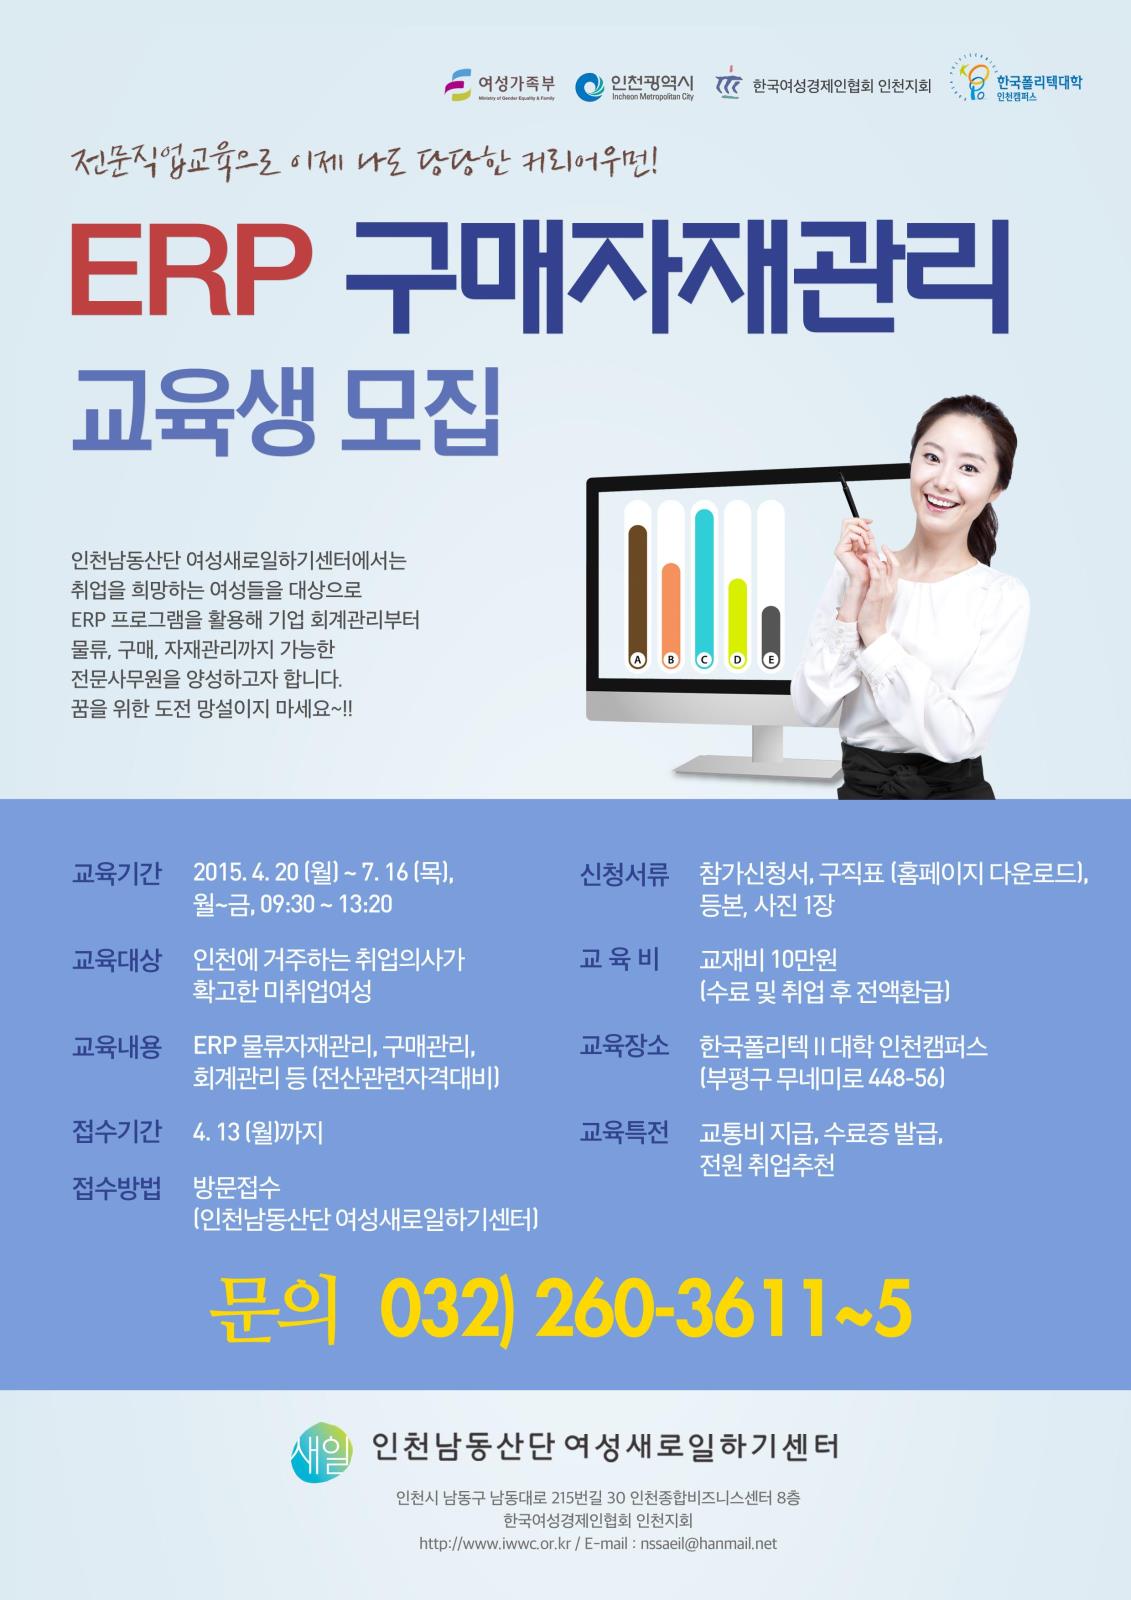 ERP 구매자재관리 교육생 모집의 1번째 이미지